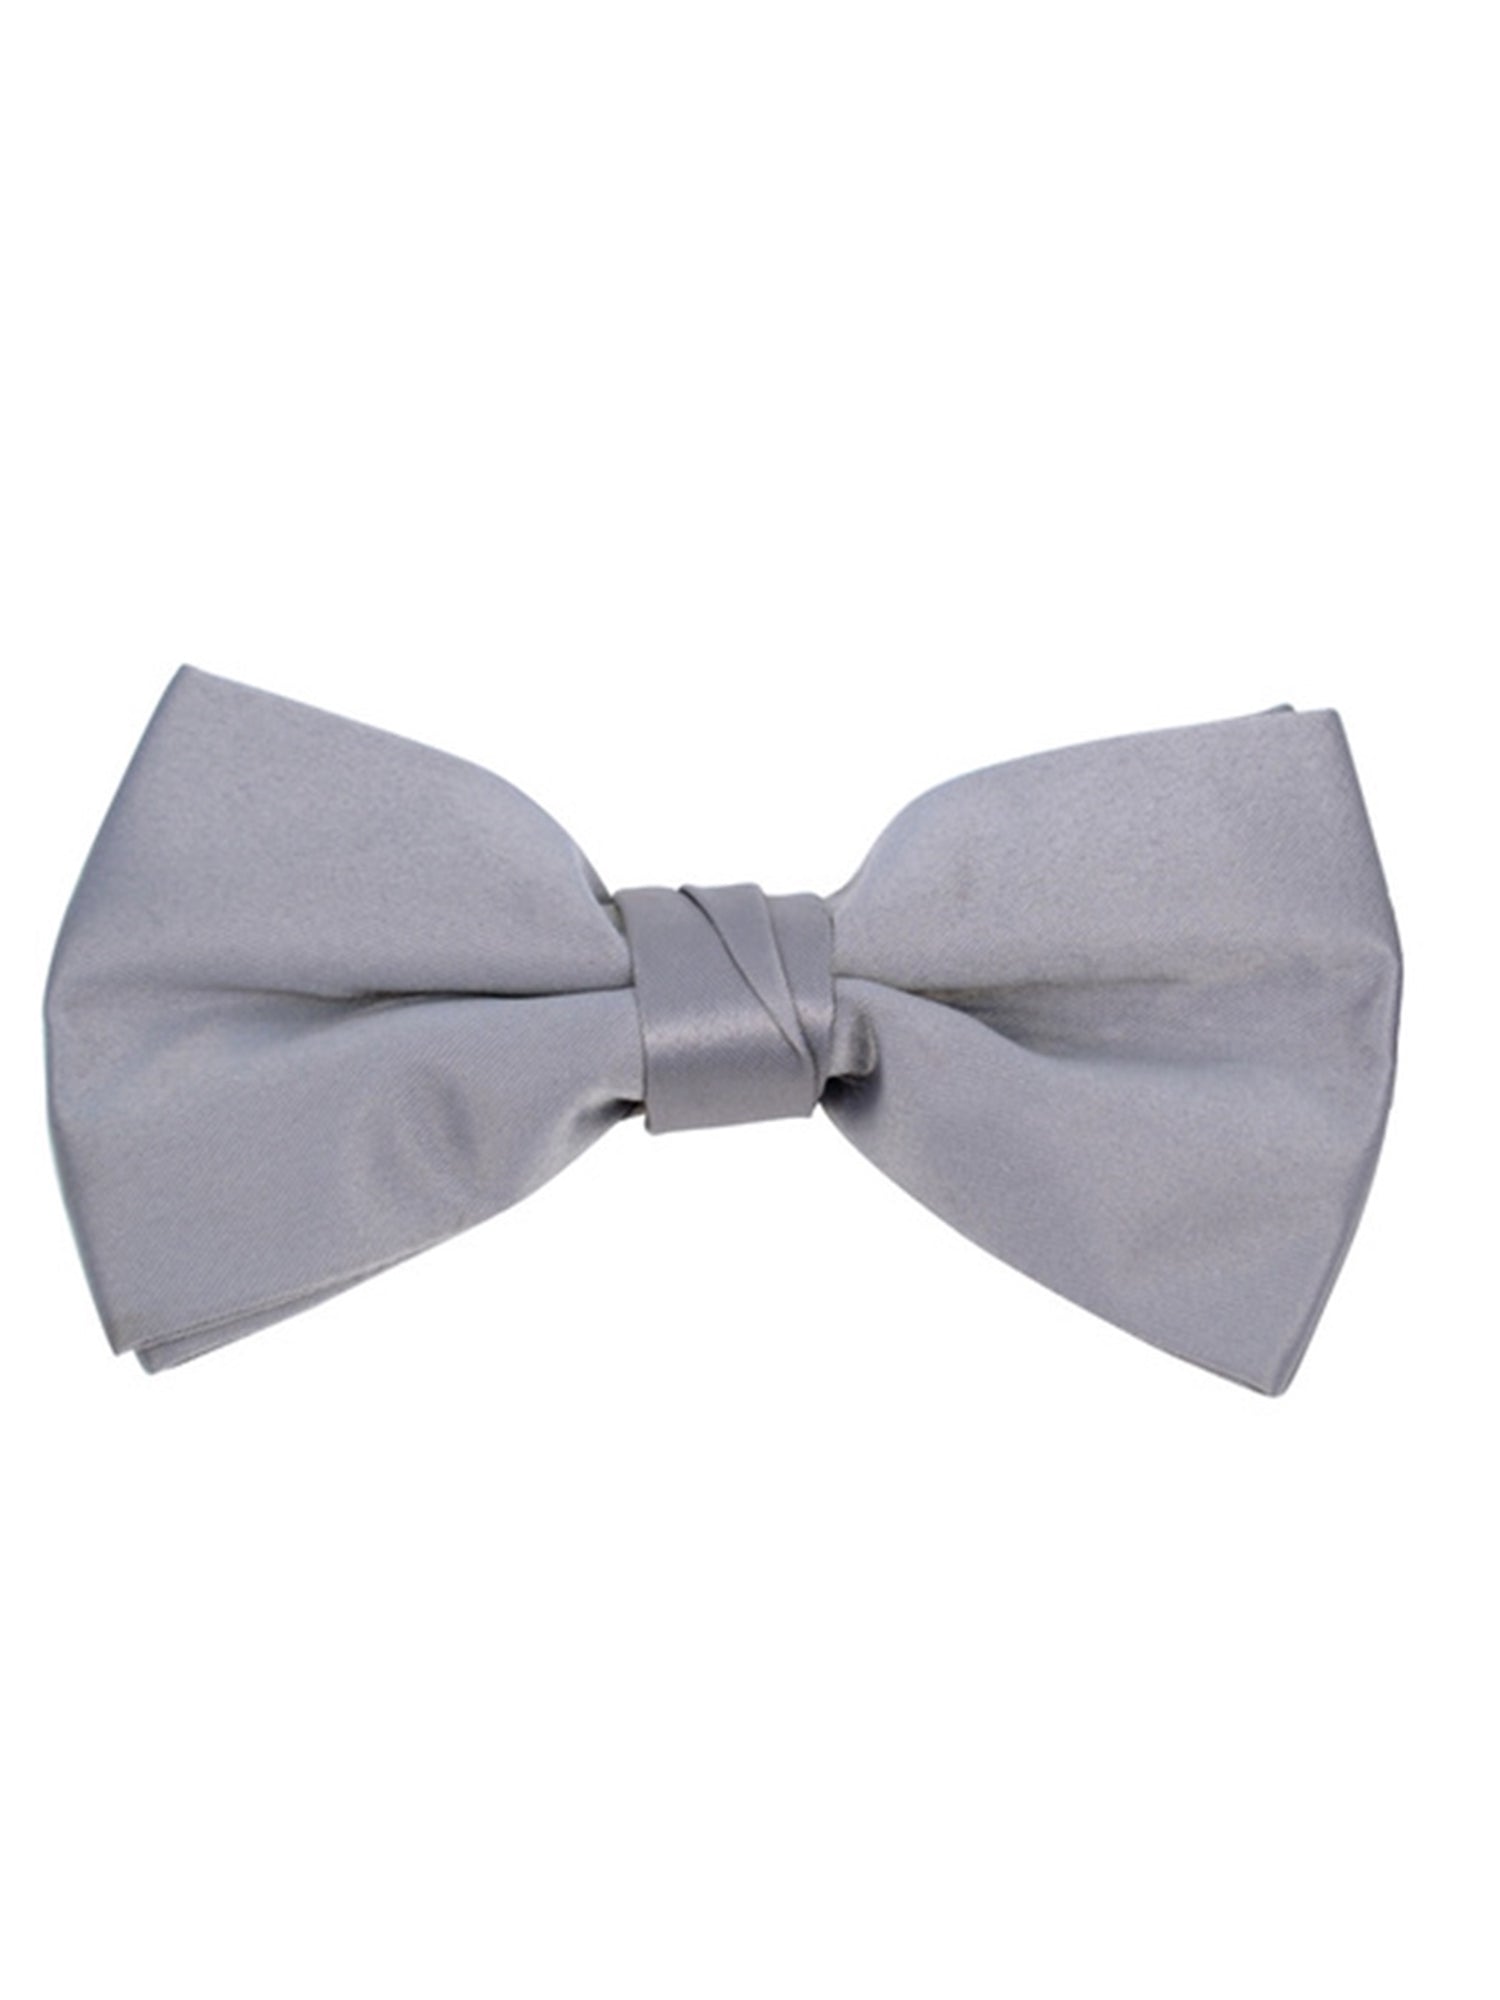 Men's Pre-tied Adjustable Length Bow Tie - Formal Tuxedo Solid Color Men's Solid Color Bow Tie TheDapperTie Gray One Size 